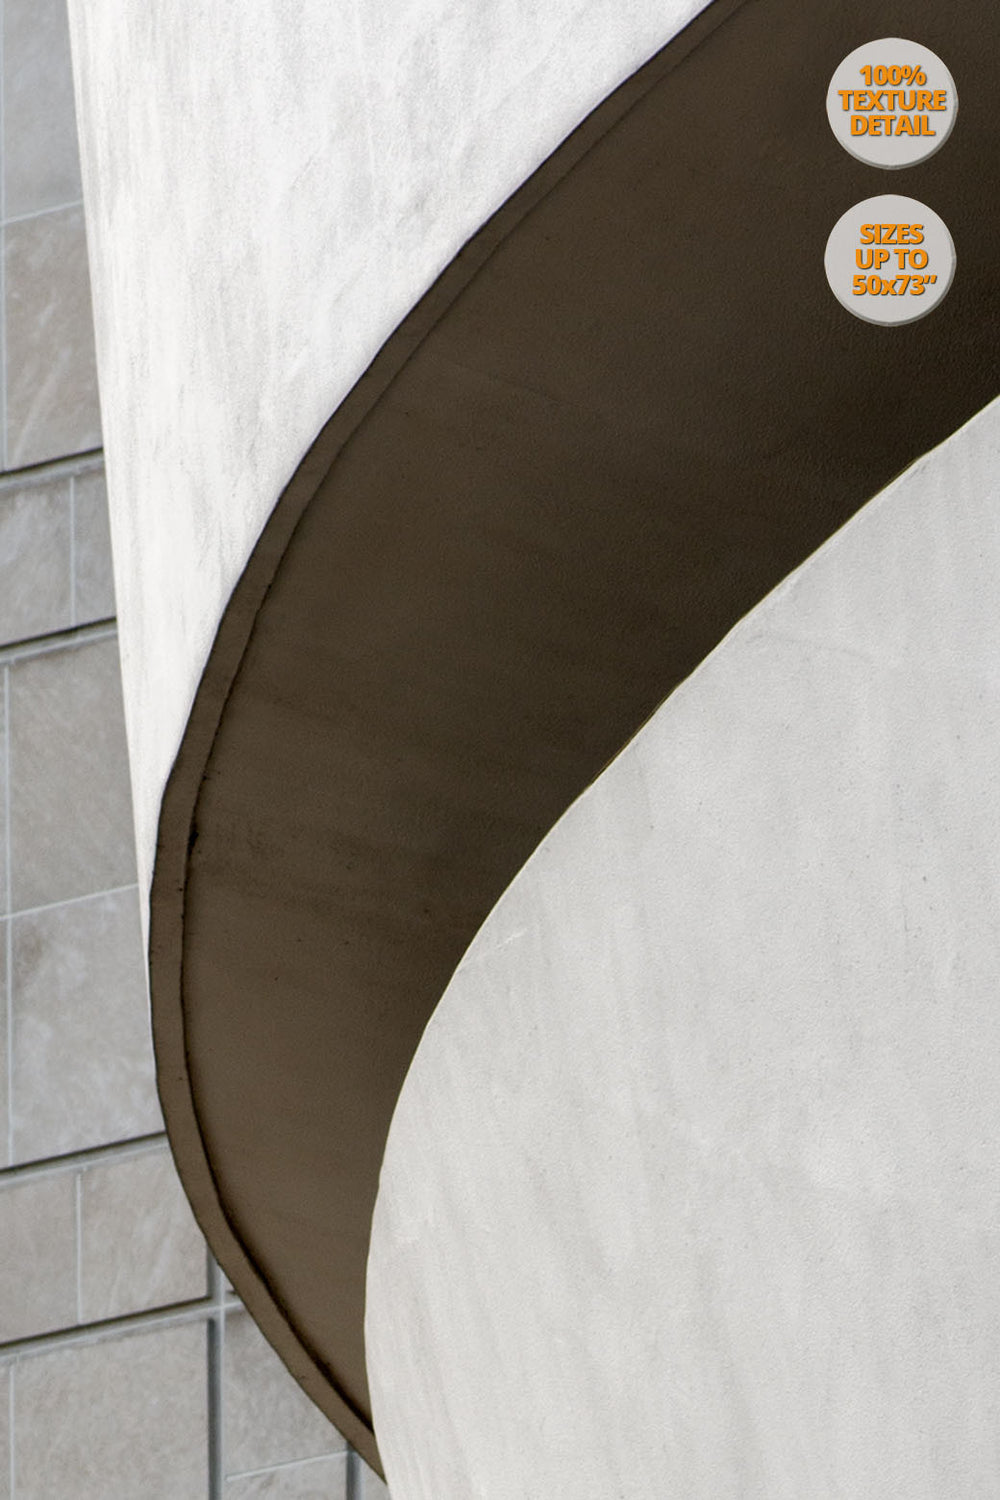 Facade of Guggenheim Museum, New York. | 100% Magnification Detail.